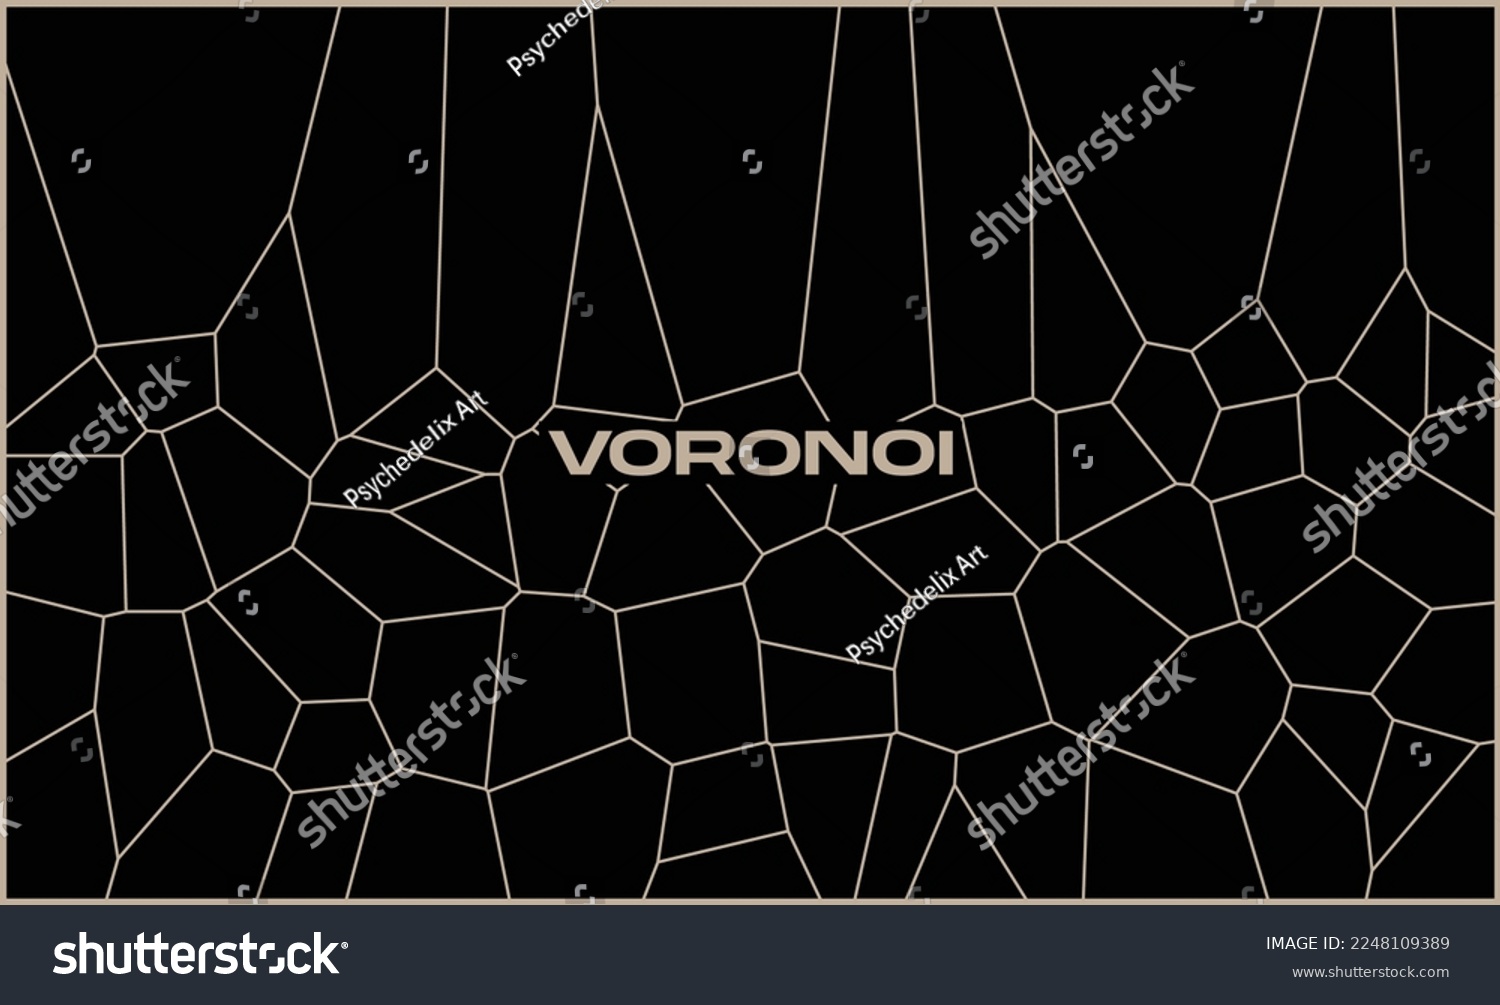 SVG of Voronoi Mosaic Patterns Vector Background svg